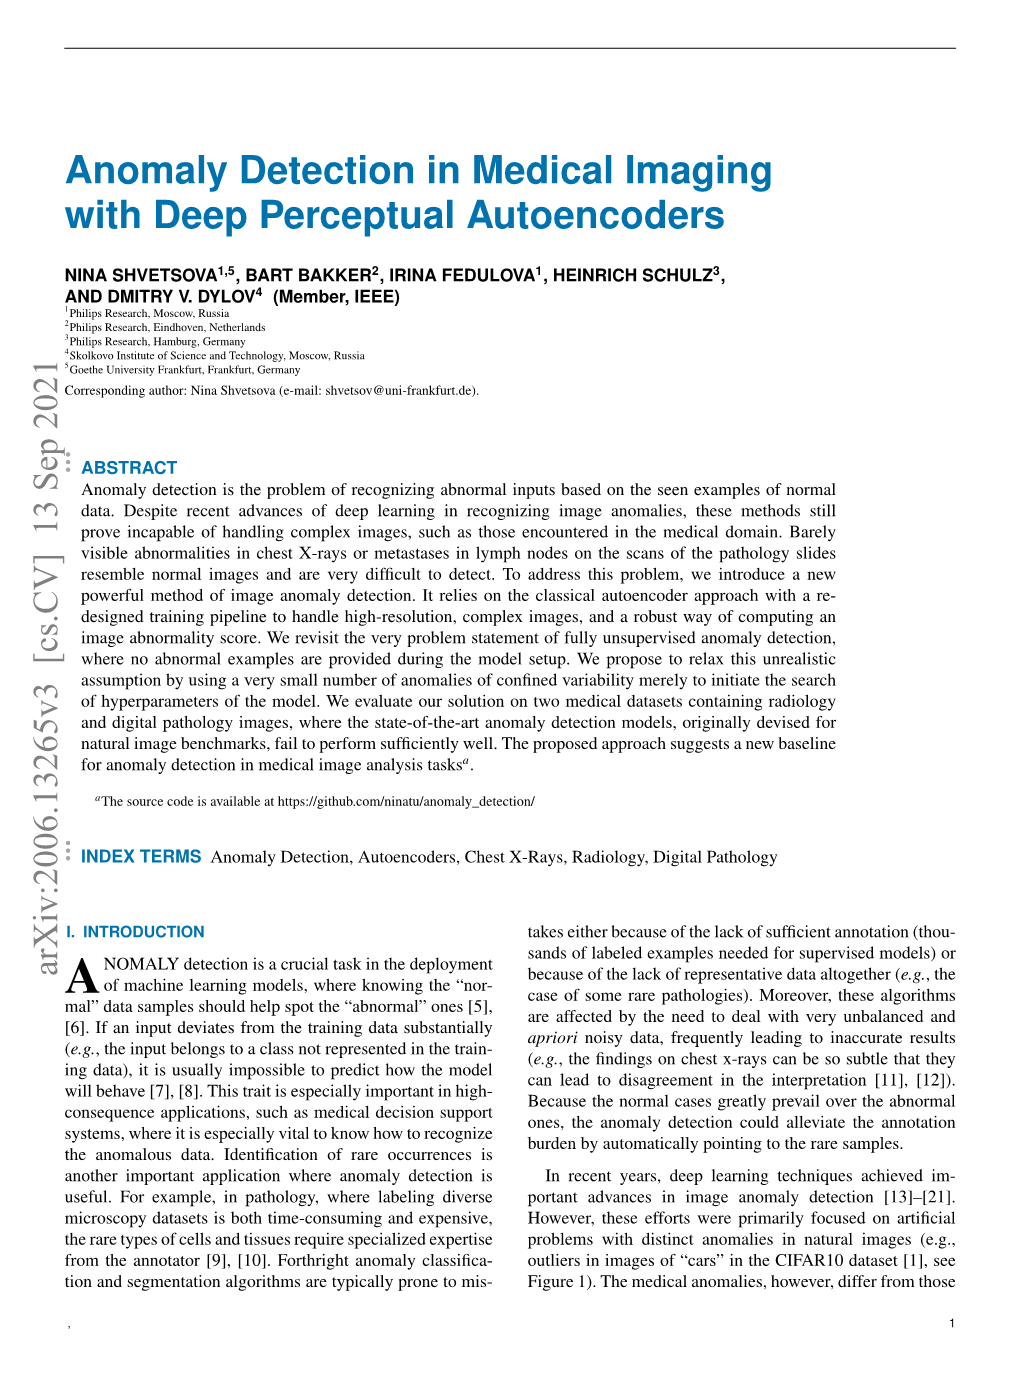 Anomaly Detection with Deep Perceptual Autoencoders